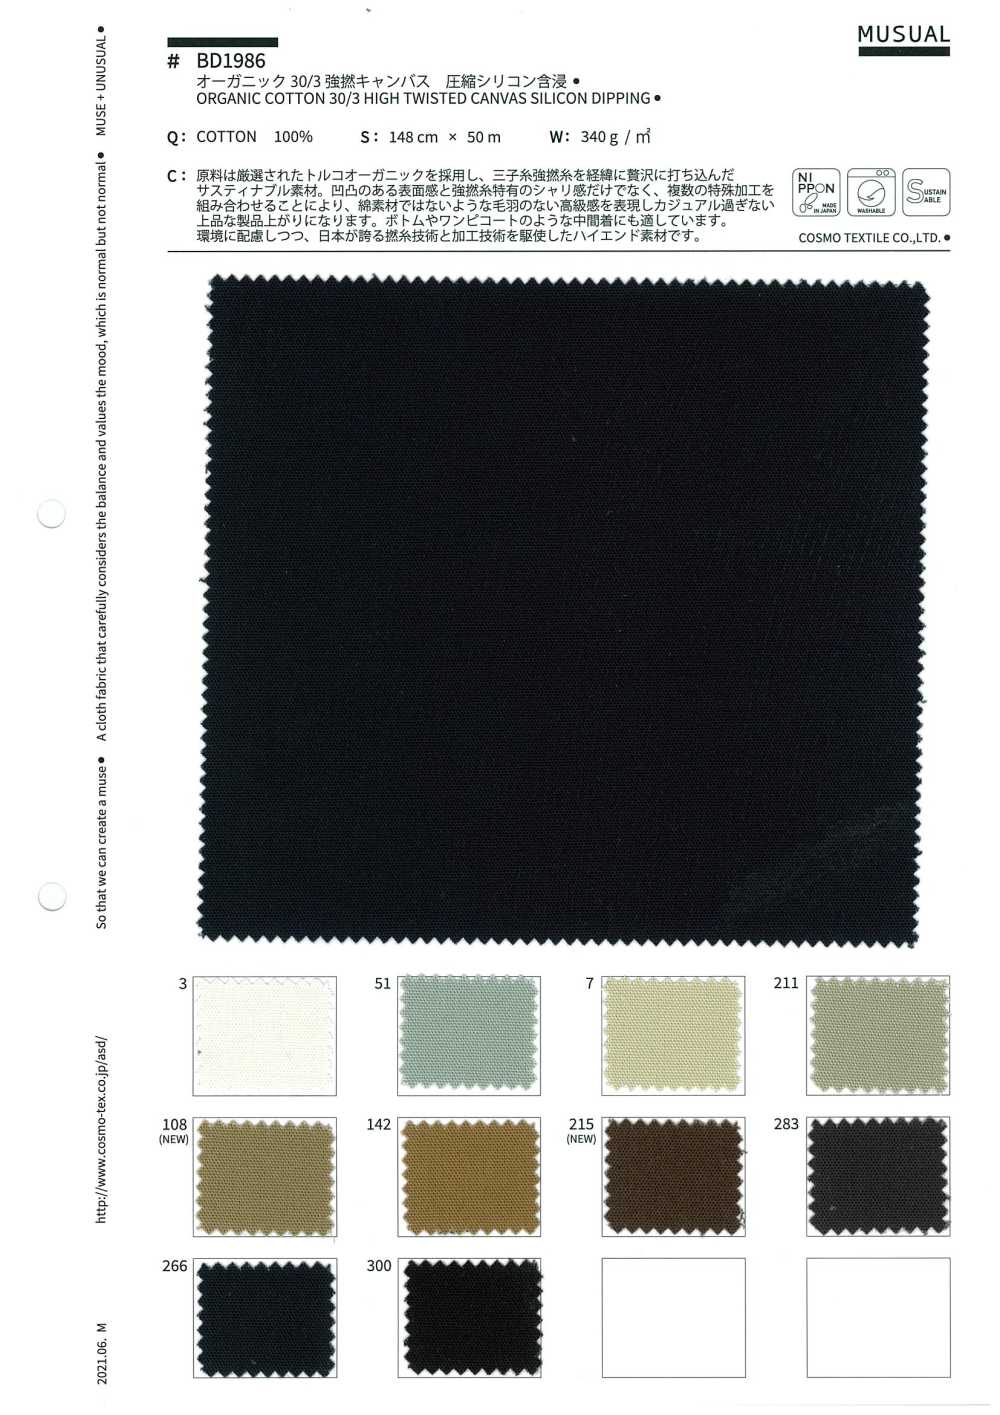 BD1986 有機棉 30/3 高捻帆布壓縮矽膠含浸加工[面料] Cosmo Textile 日本